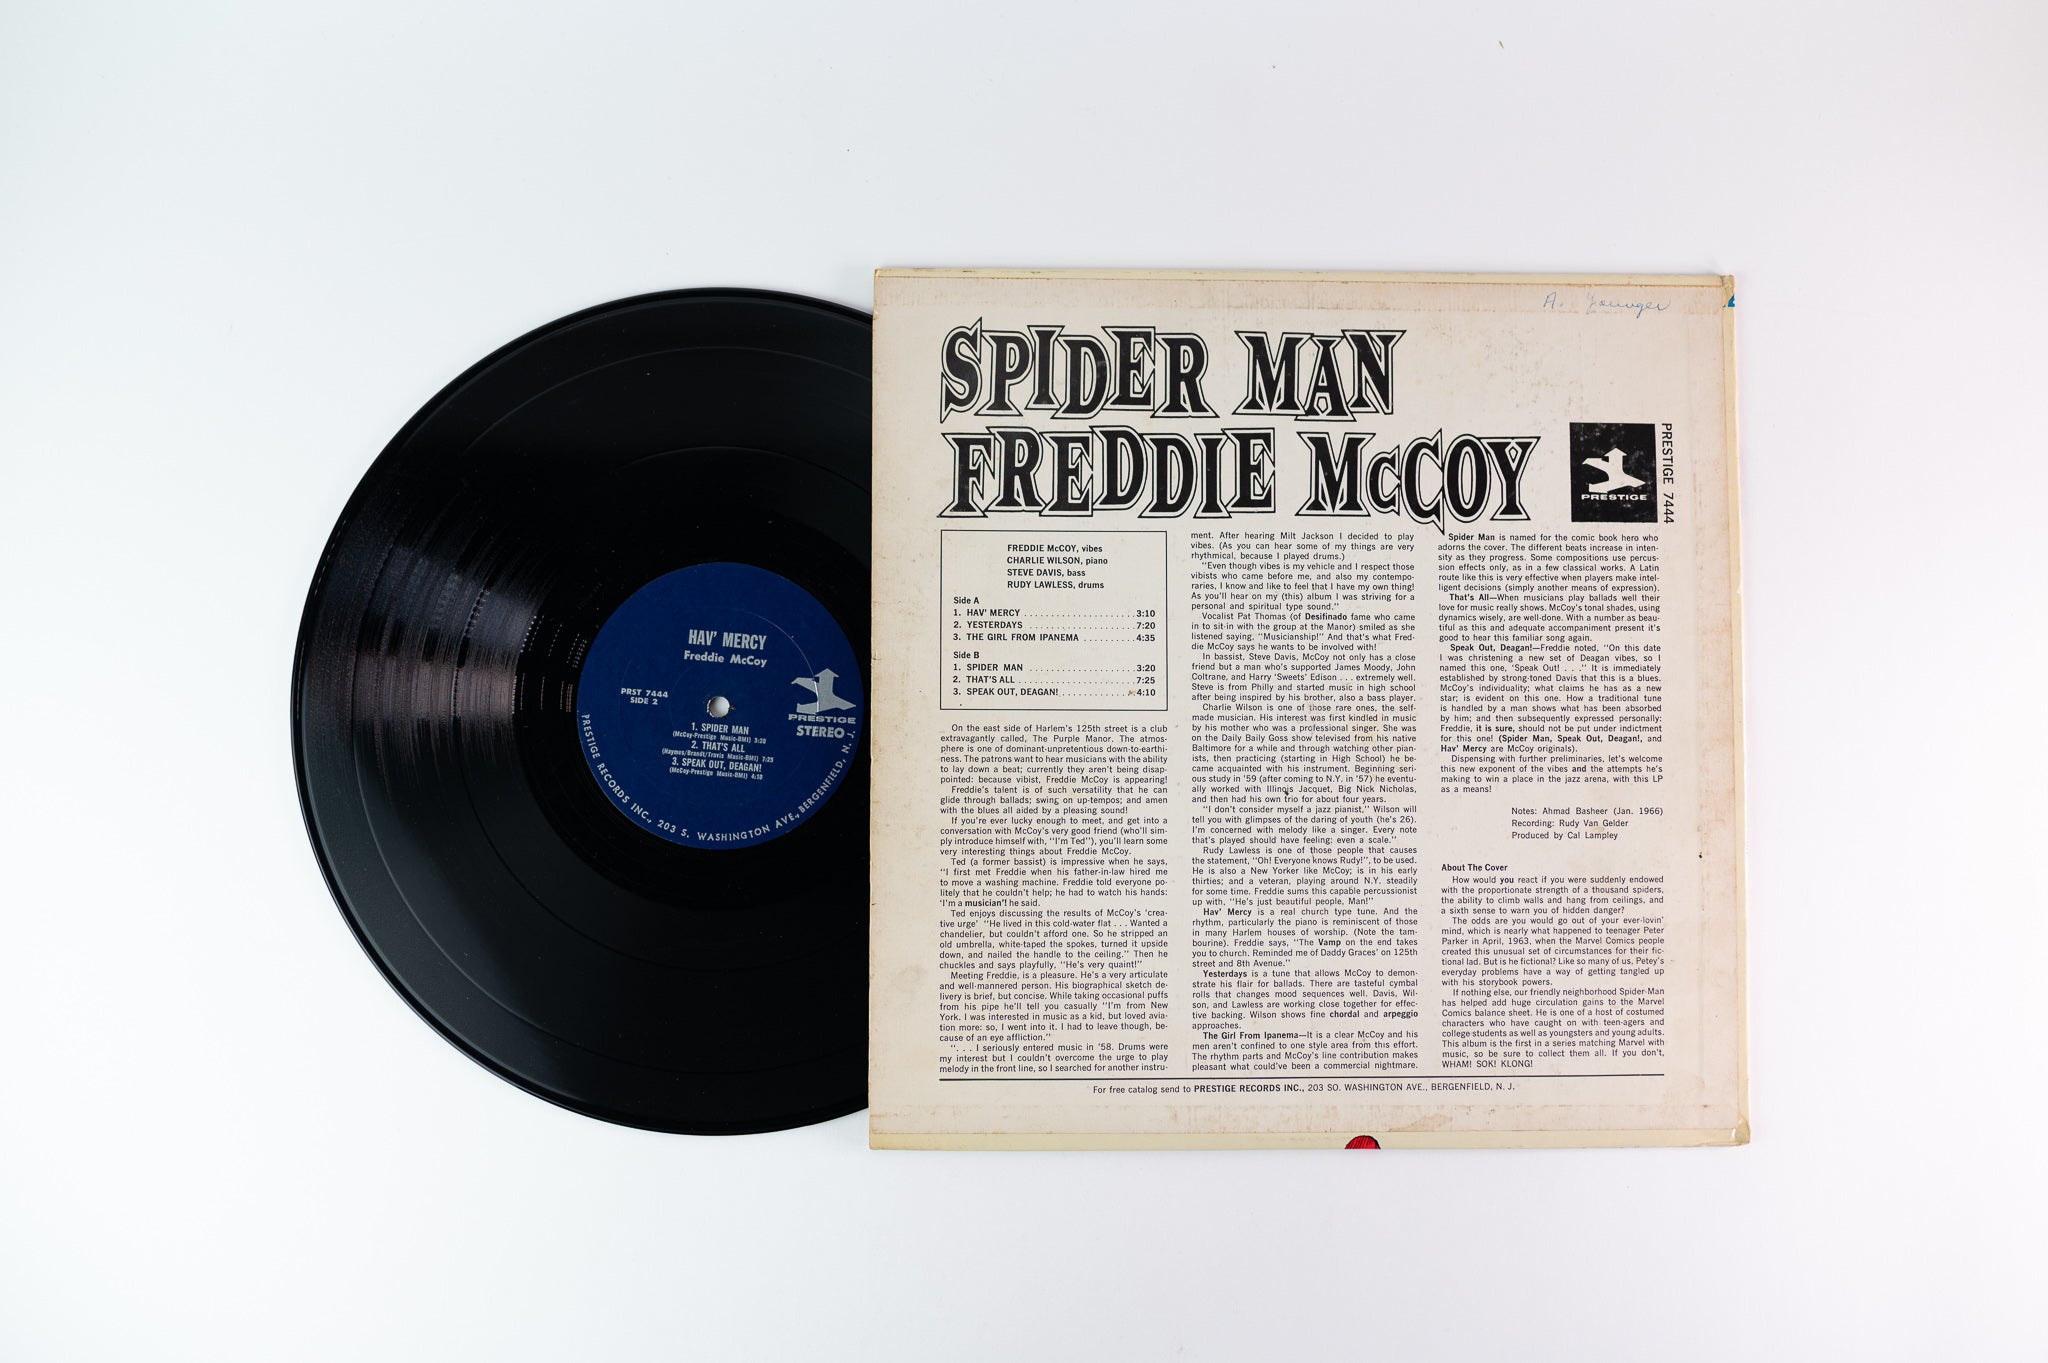 Freddie McCoy - Spider Man on Prestige Stereo